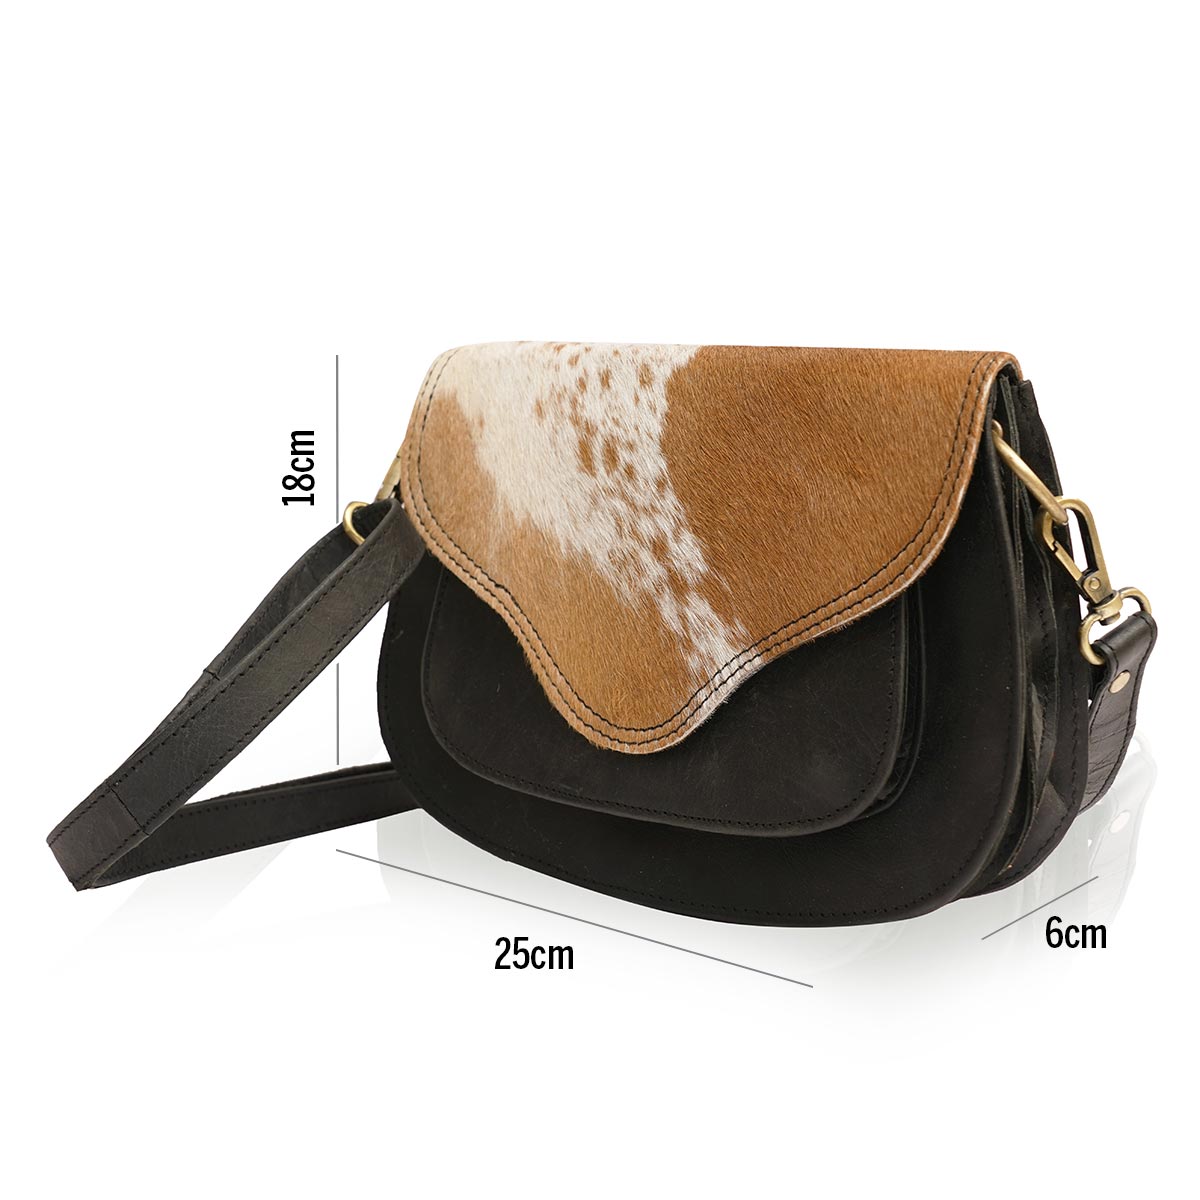 Contmphi- Leather Sling Bag